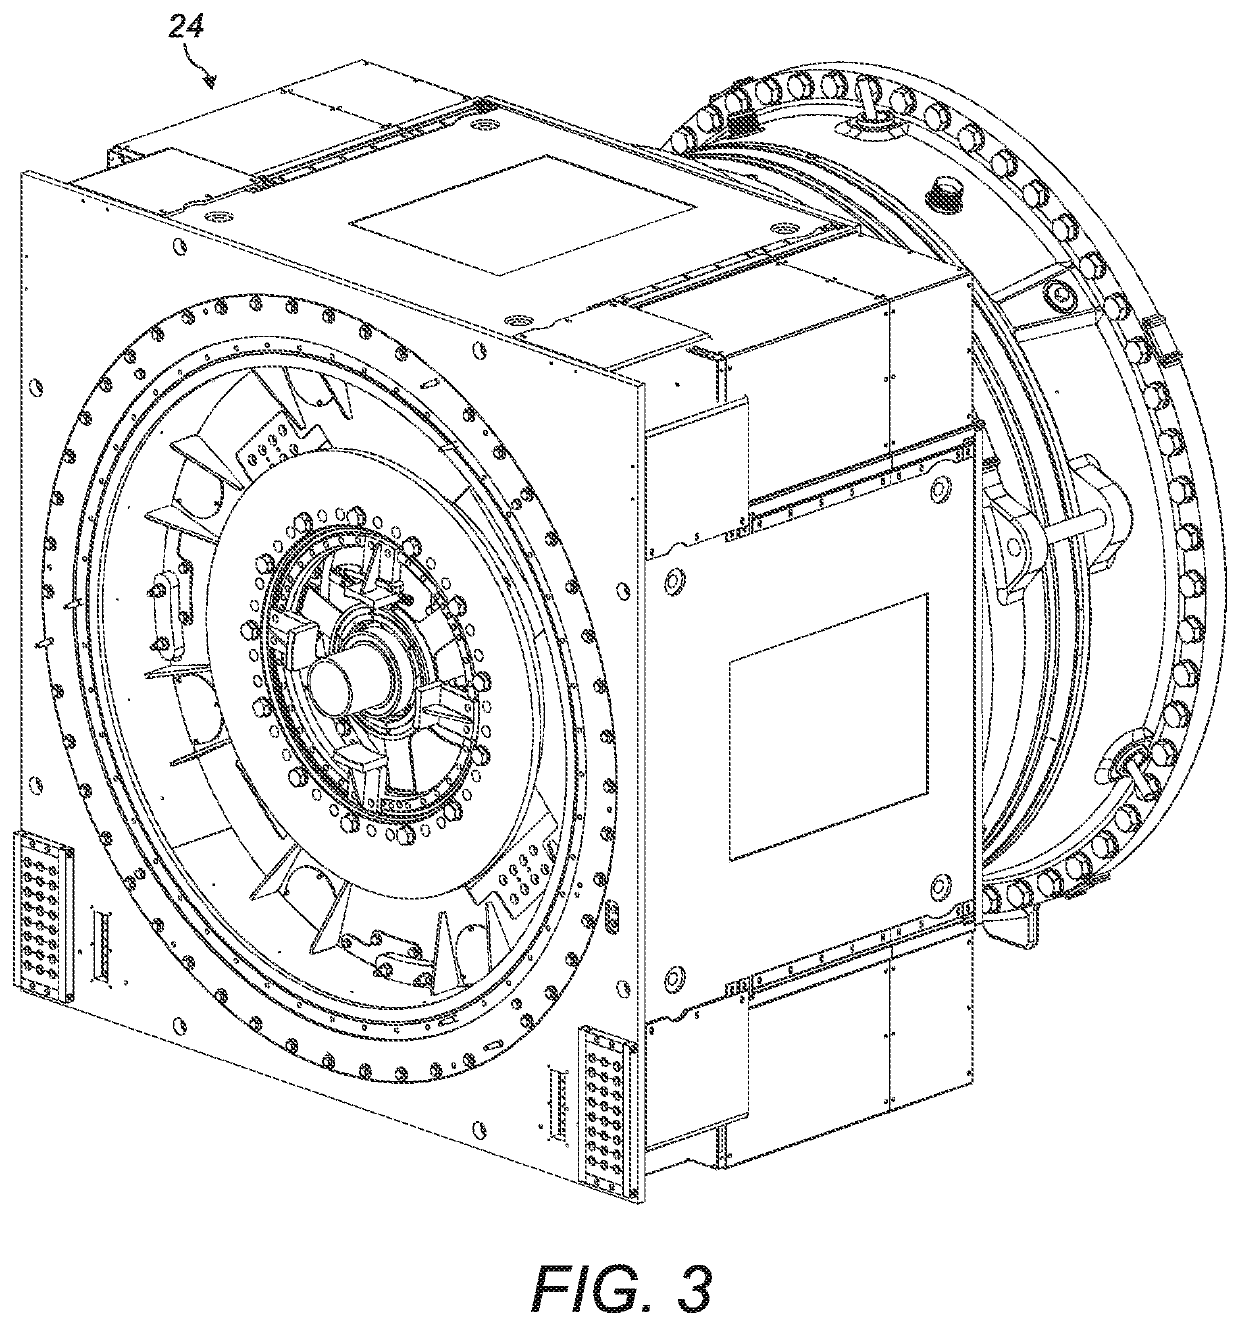 A generator rotor assembly